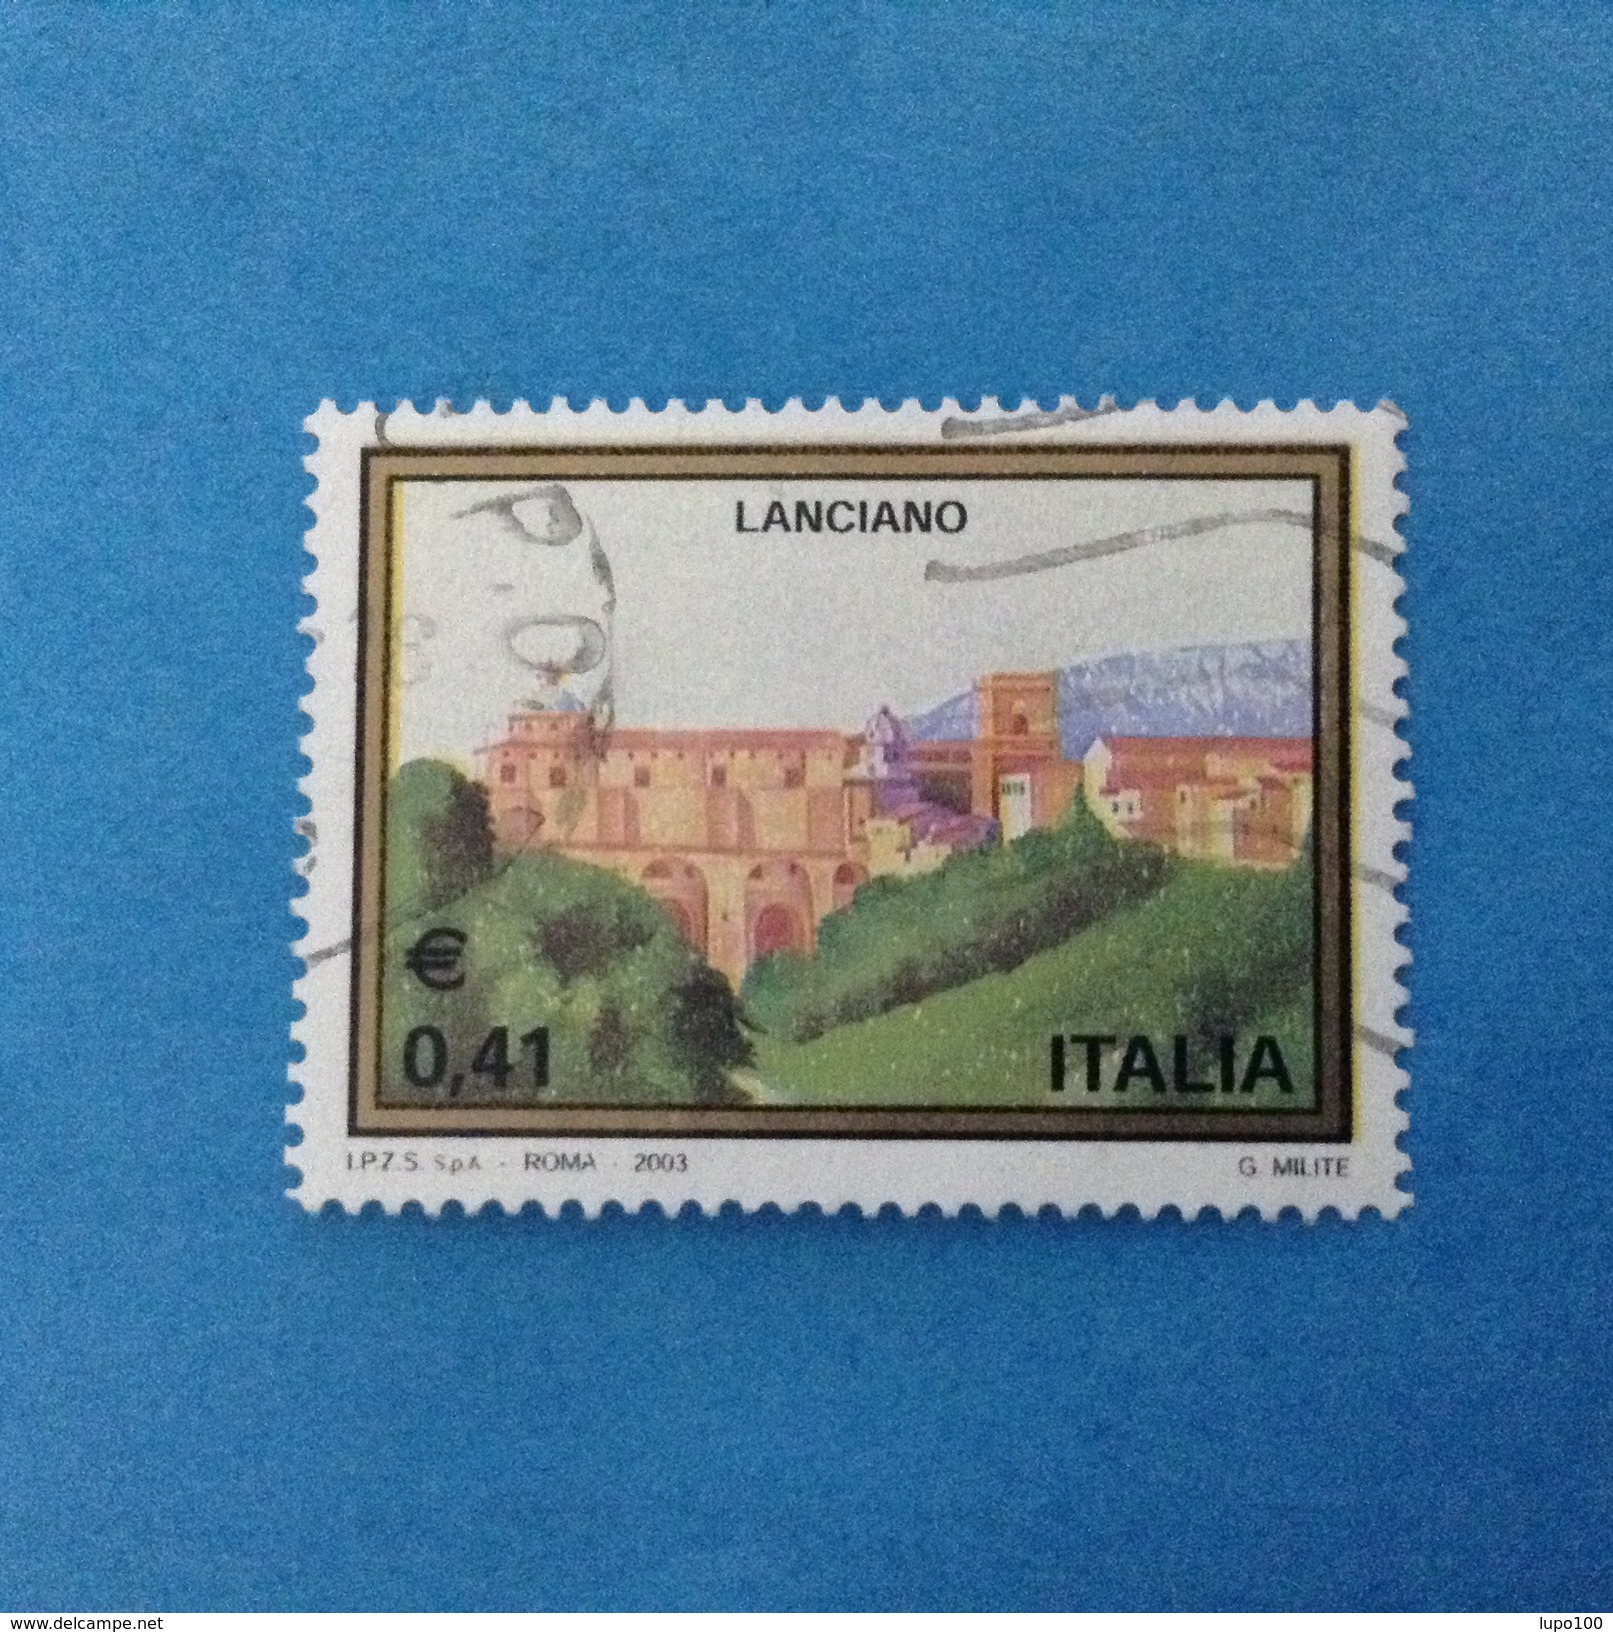 2003 ITALIA FRANCOBOLLO USATO STAMP USED - TURISTICA LANCIANO - - 2001-10: Usados